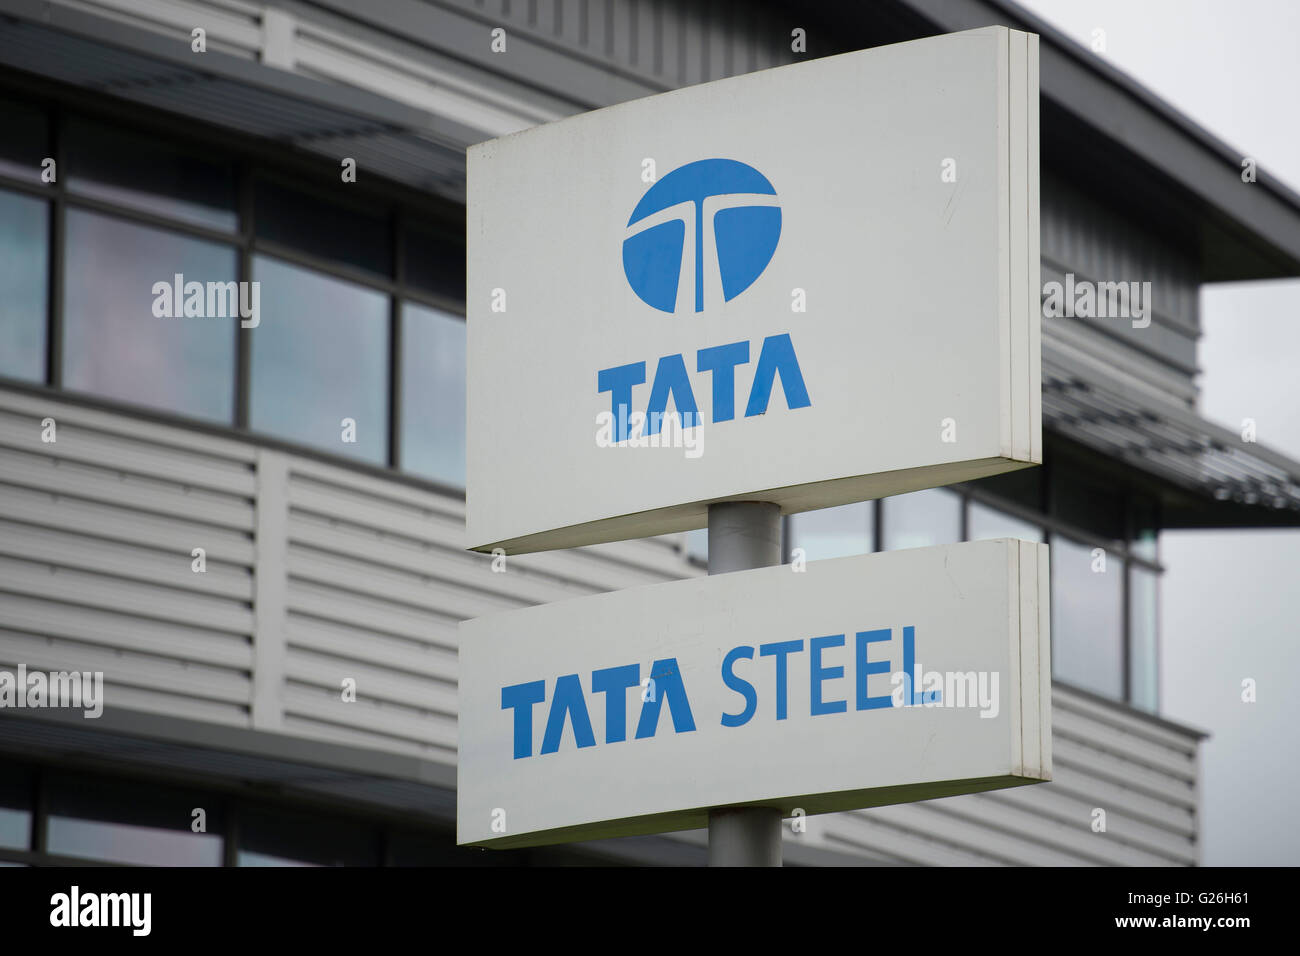 Tata-Steel-logo